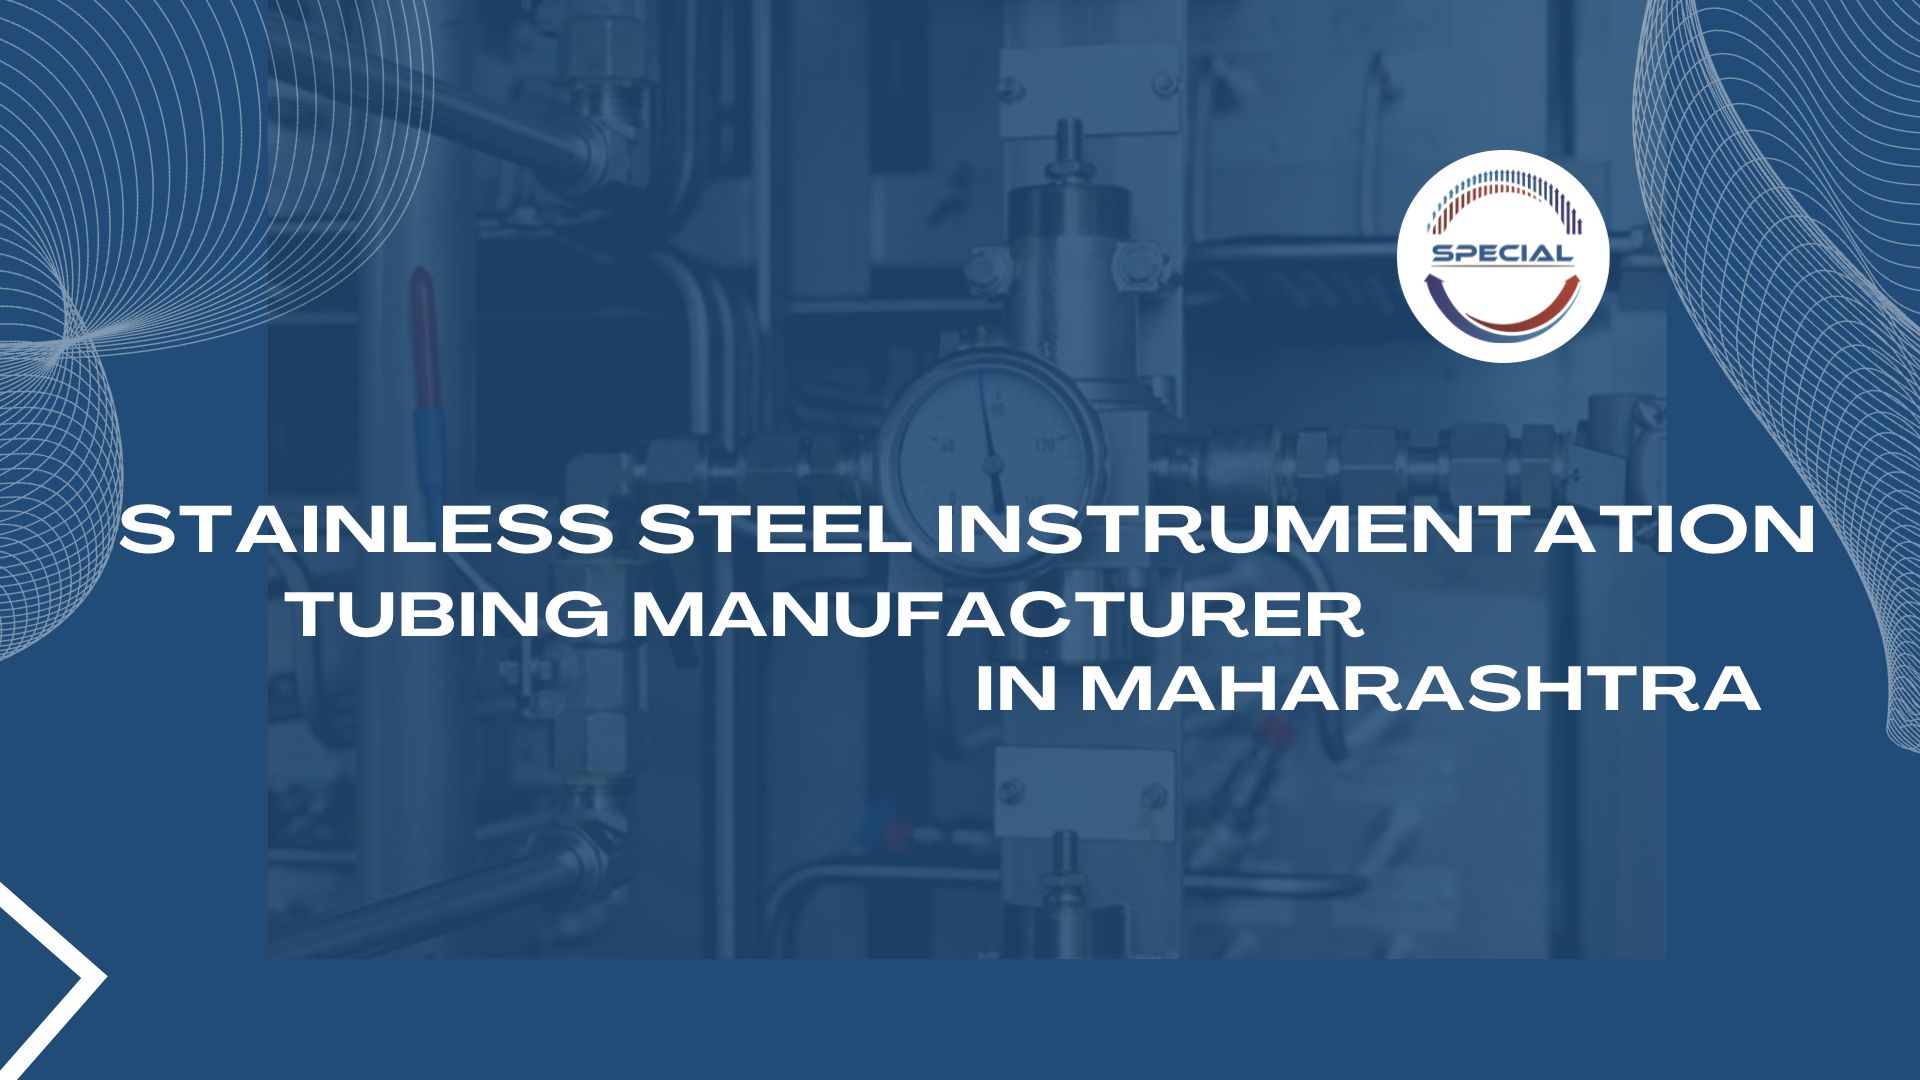 Stainless Steel Instrumentation Tubing Manufacturer in Maharashtra